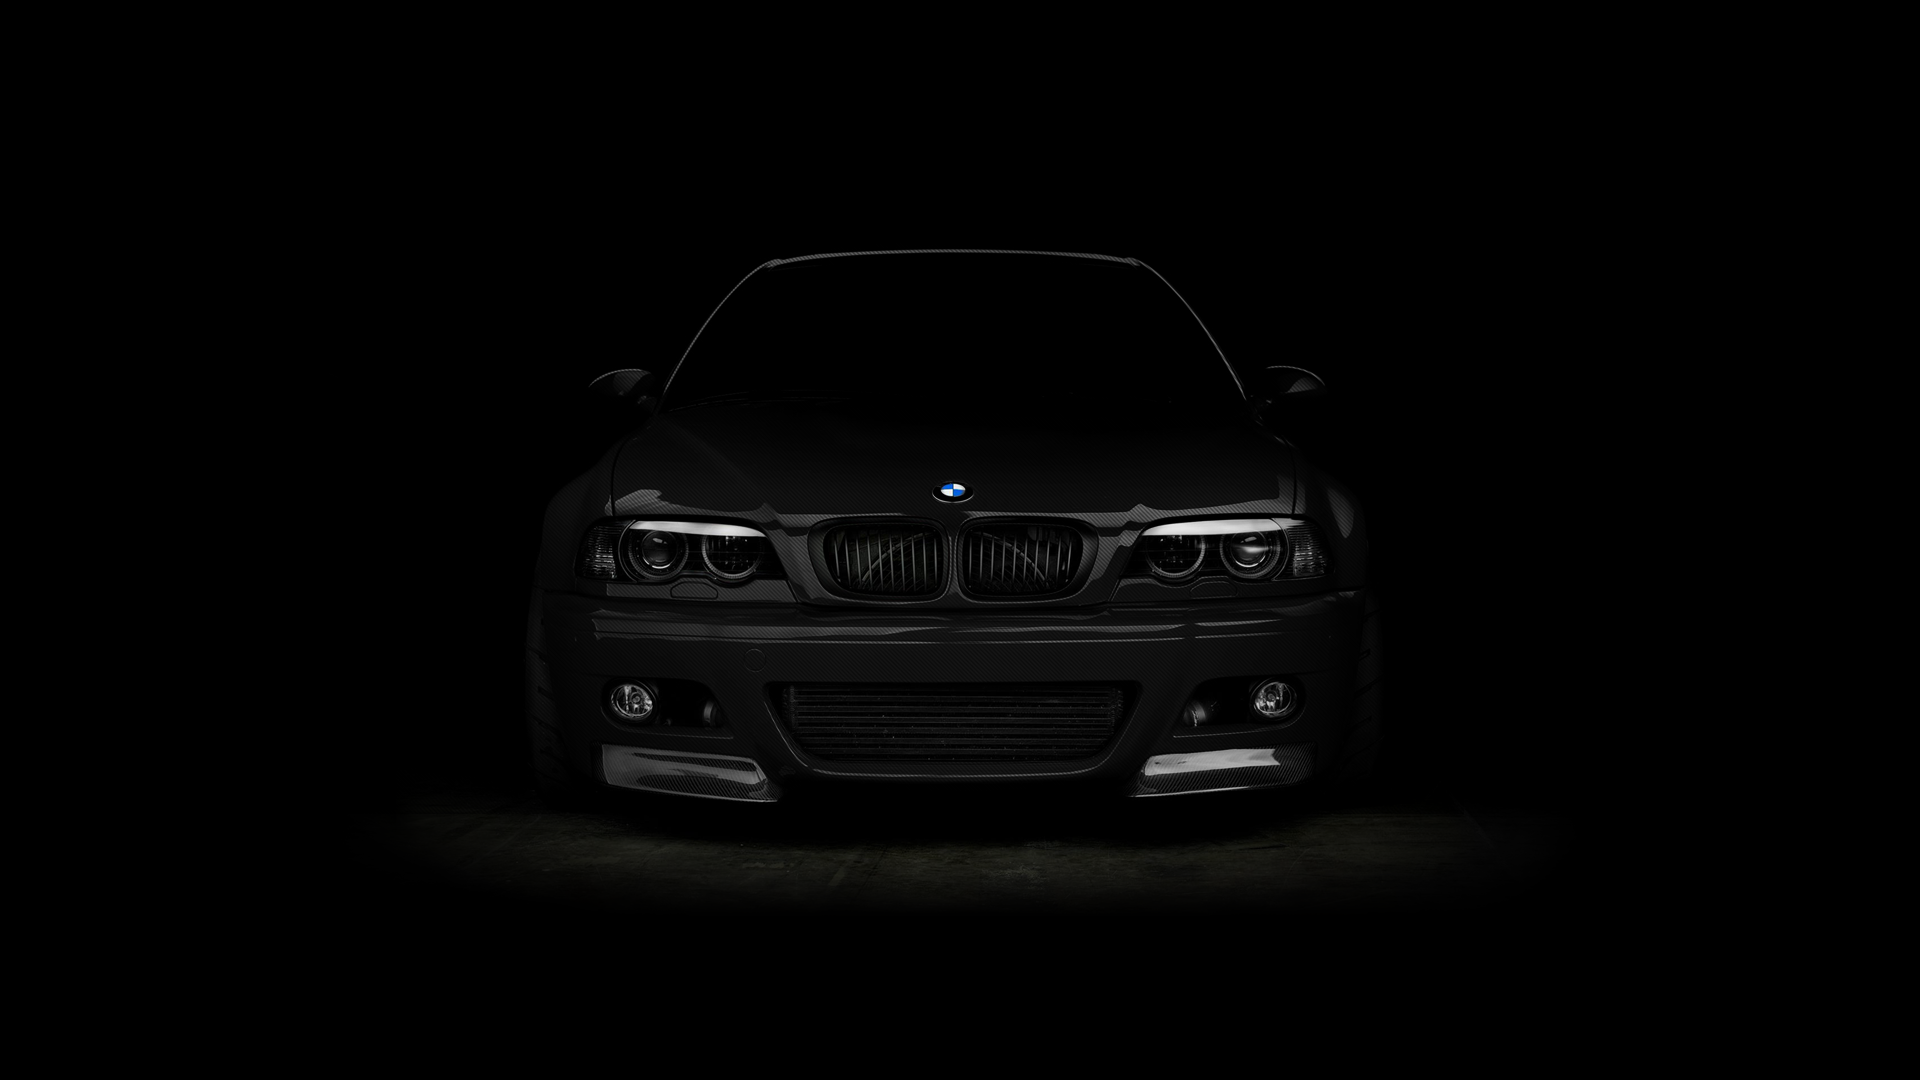 3 06 67. БМВ м3 черная. BMW e46 в темноте. BMW m3 в темноте. БМВ е46 черная.